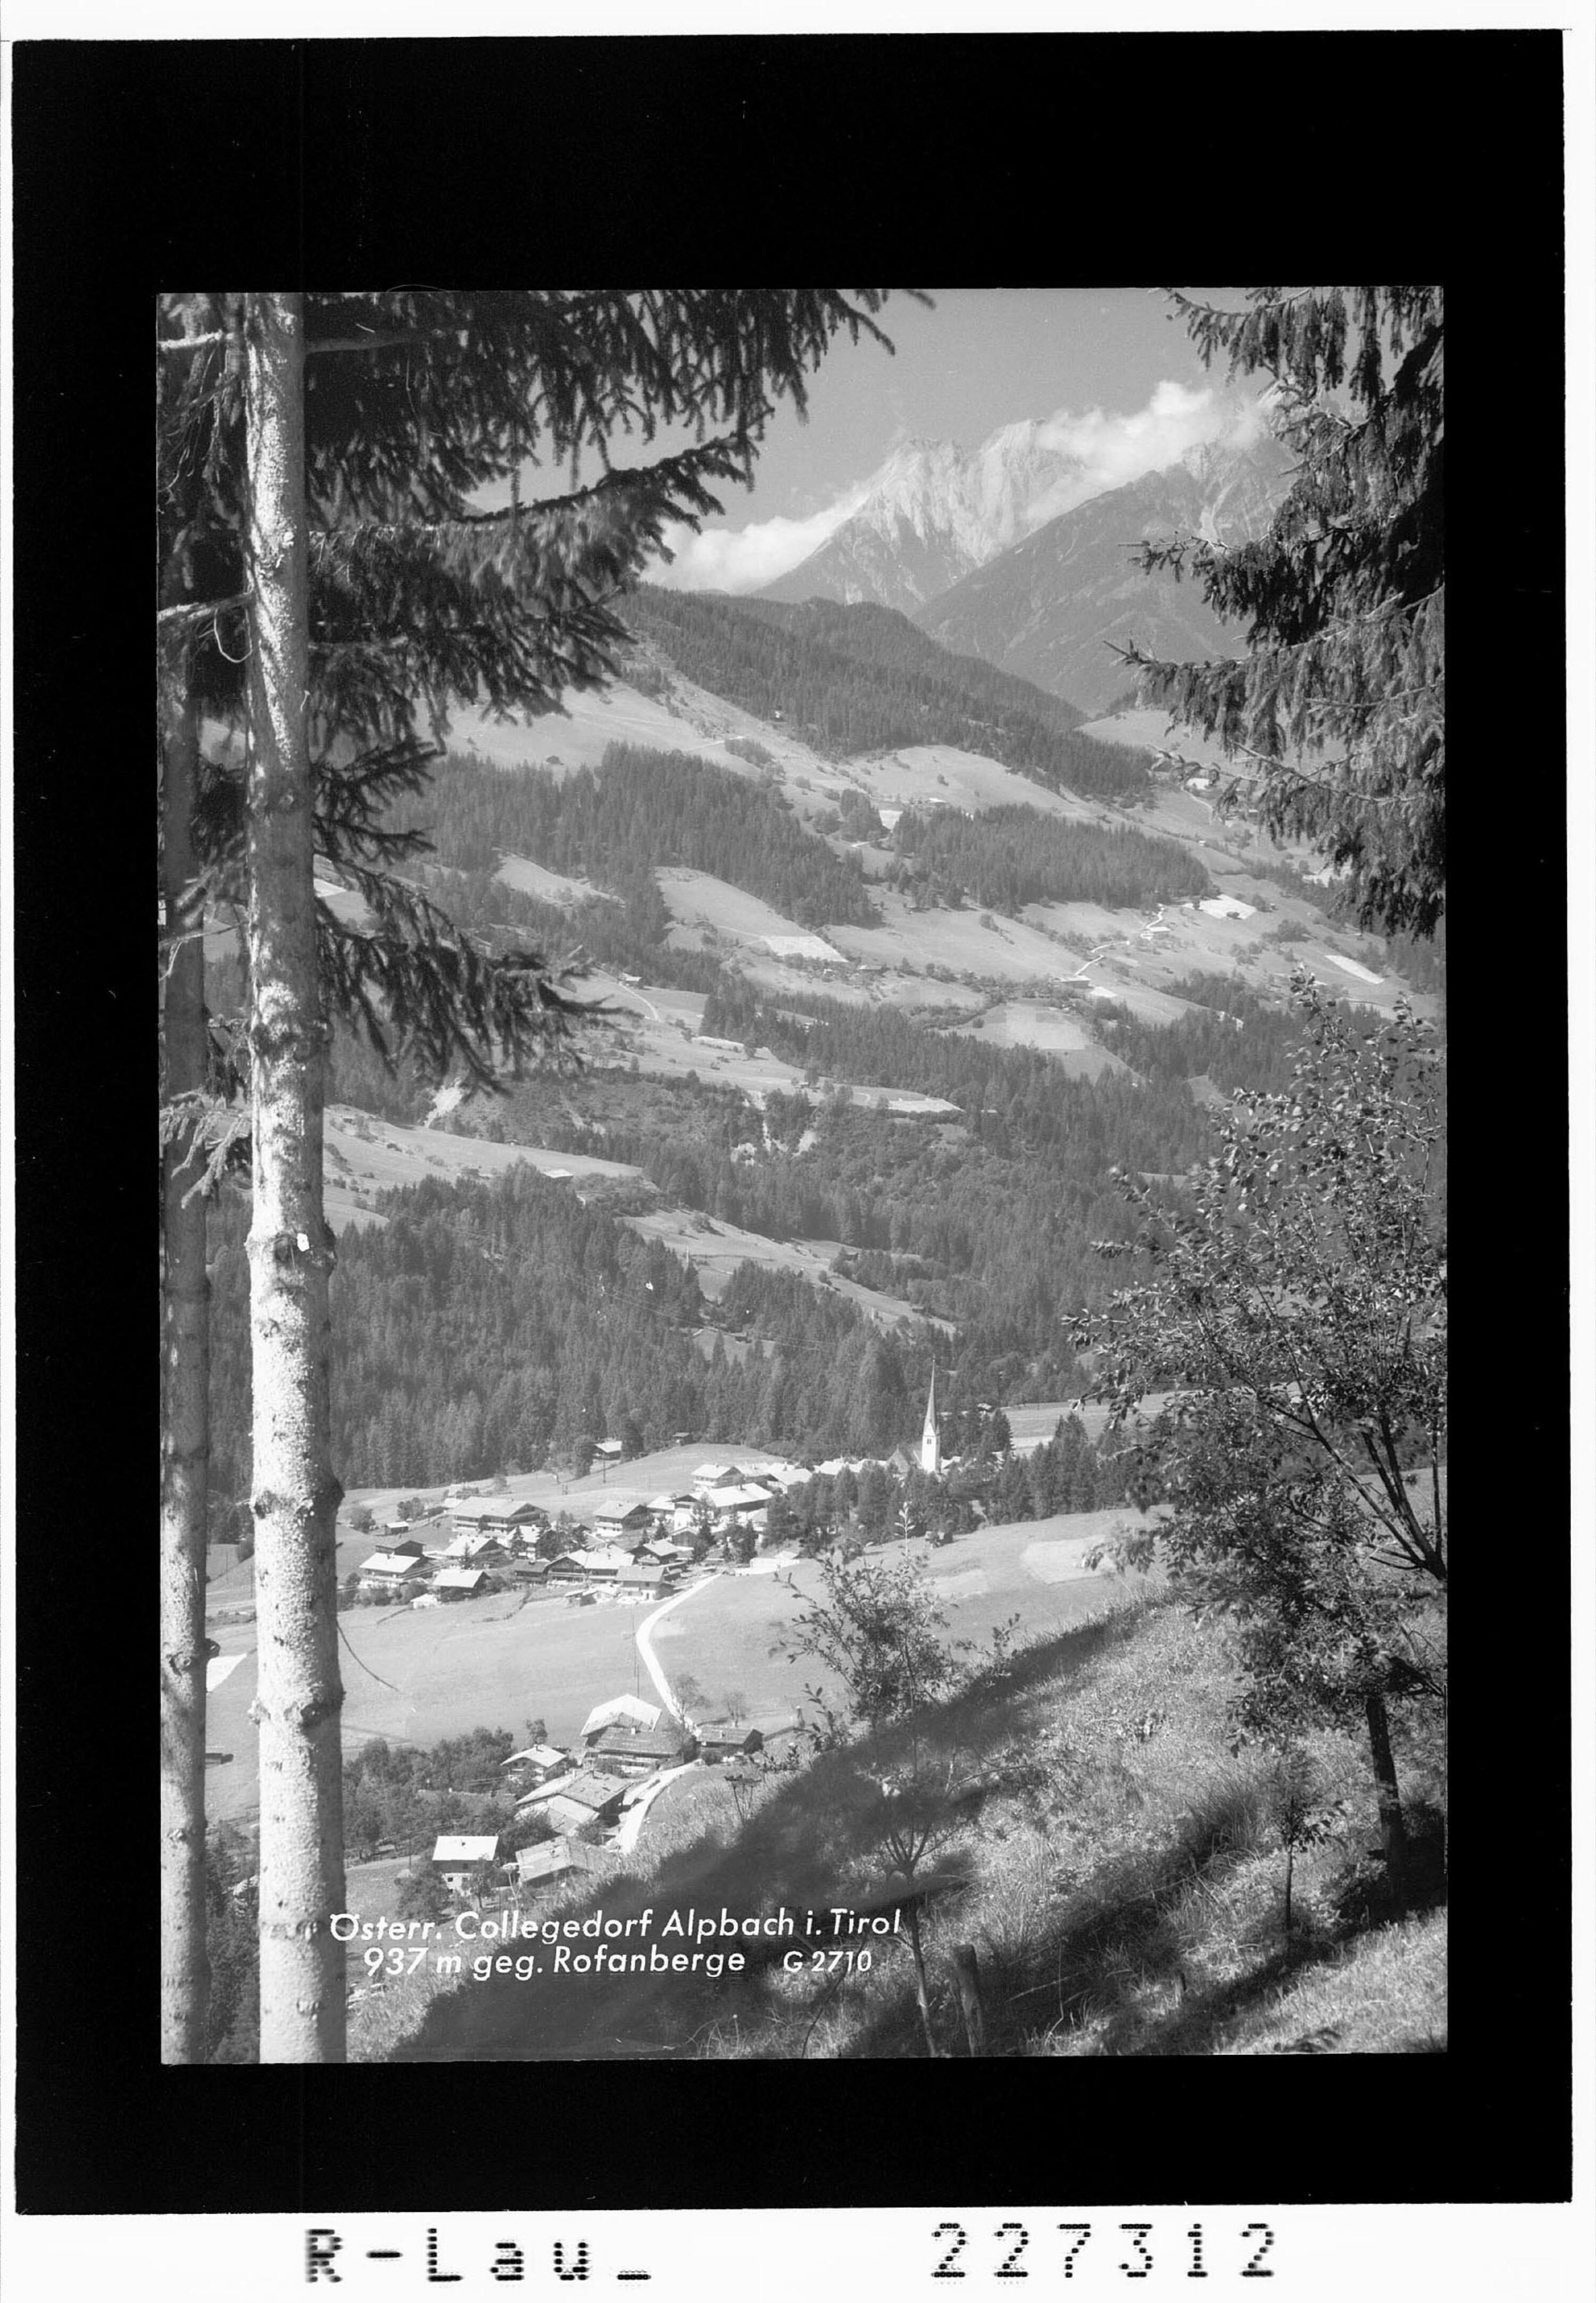 Österr. Collegedorf Alpbach in Tirol 973 m gegen Rofanberge></div>


    <hr>
    <div class=